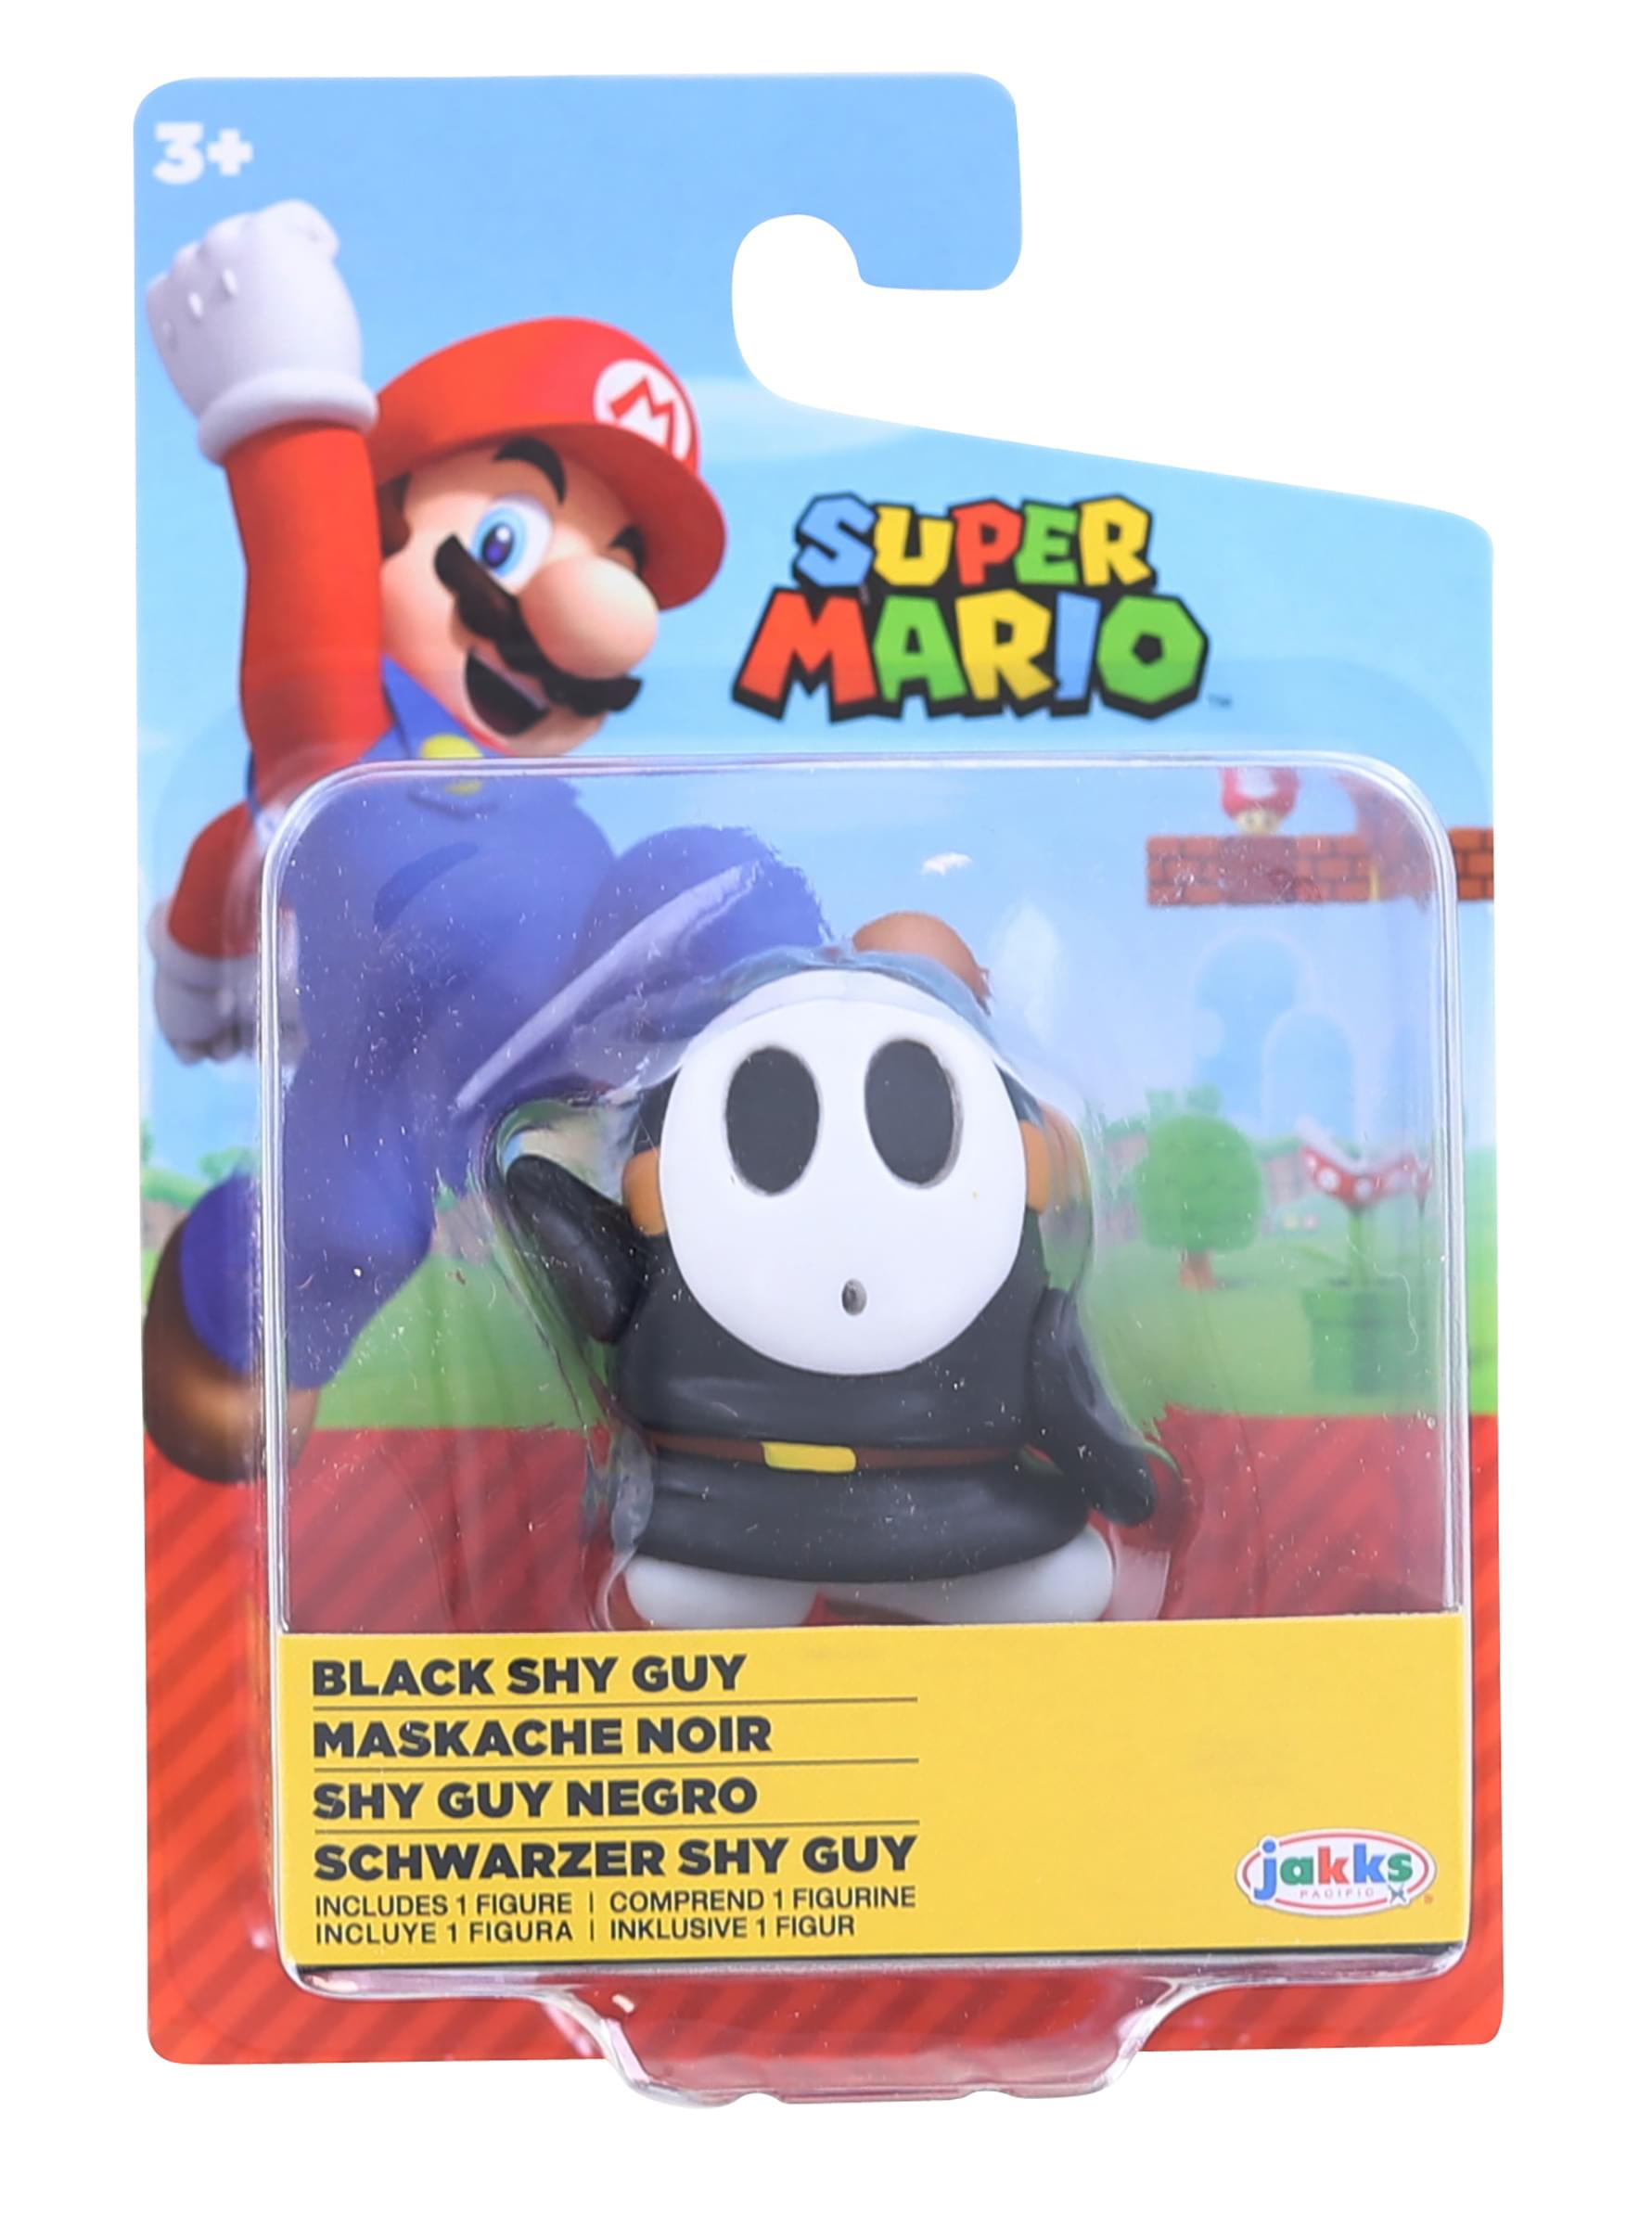 Super Mario World of Nintendo 2.5 Inch Figure | Black Shy Guy